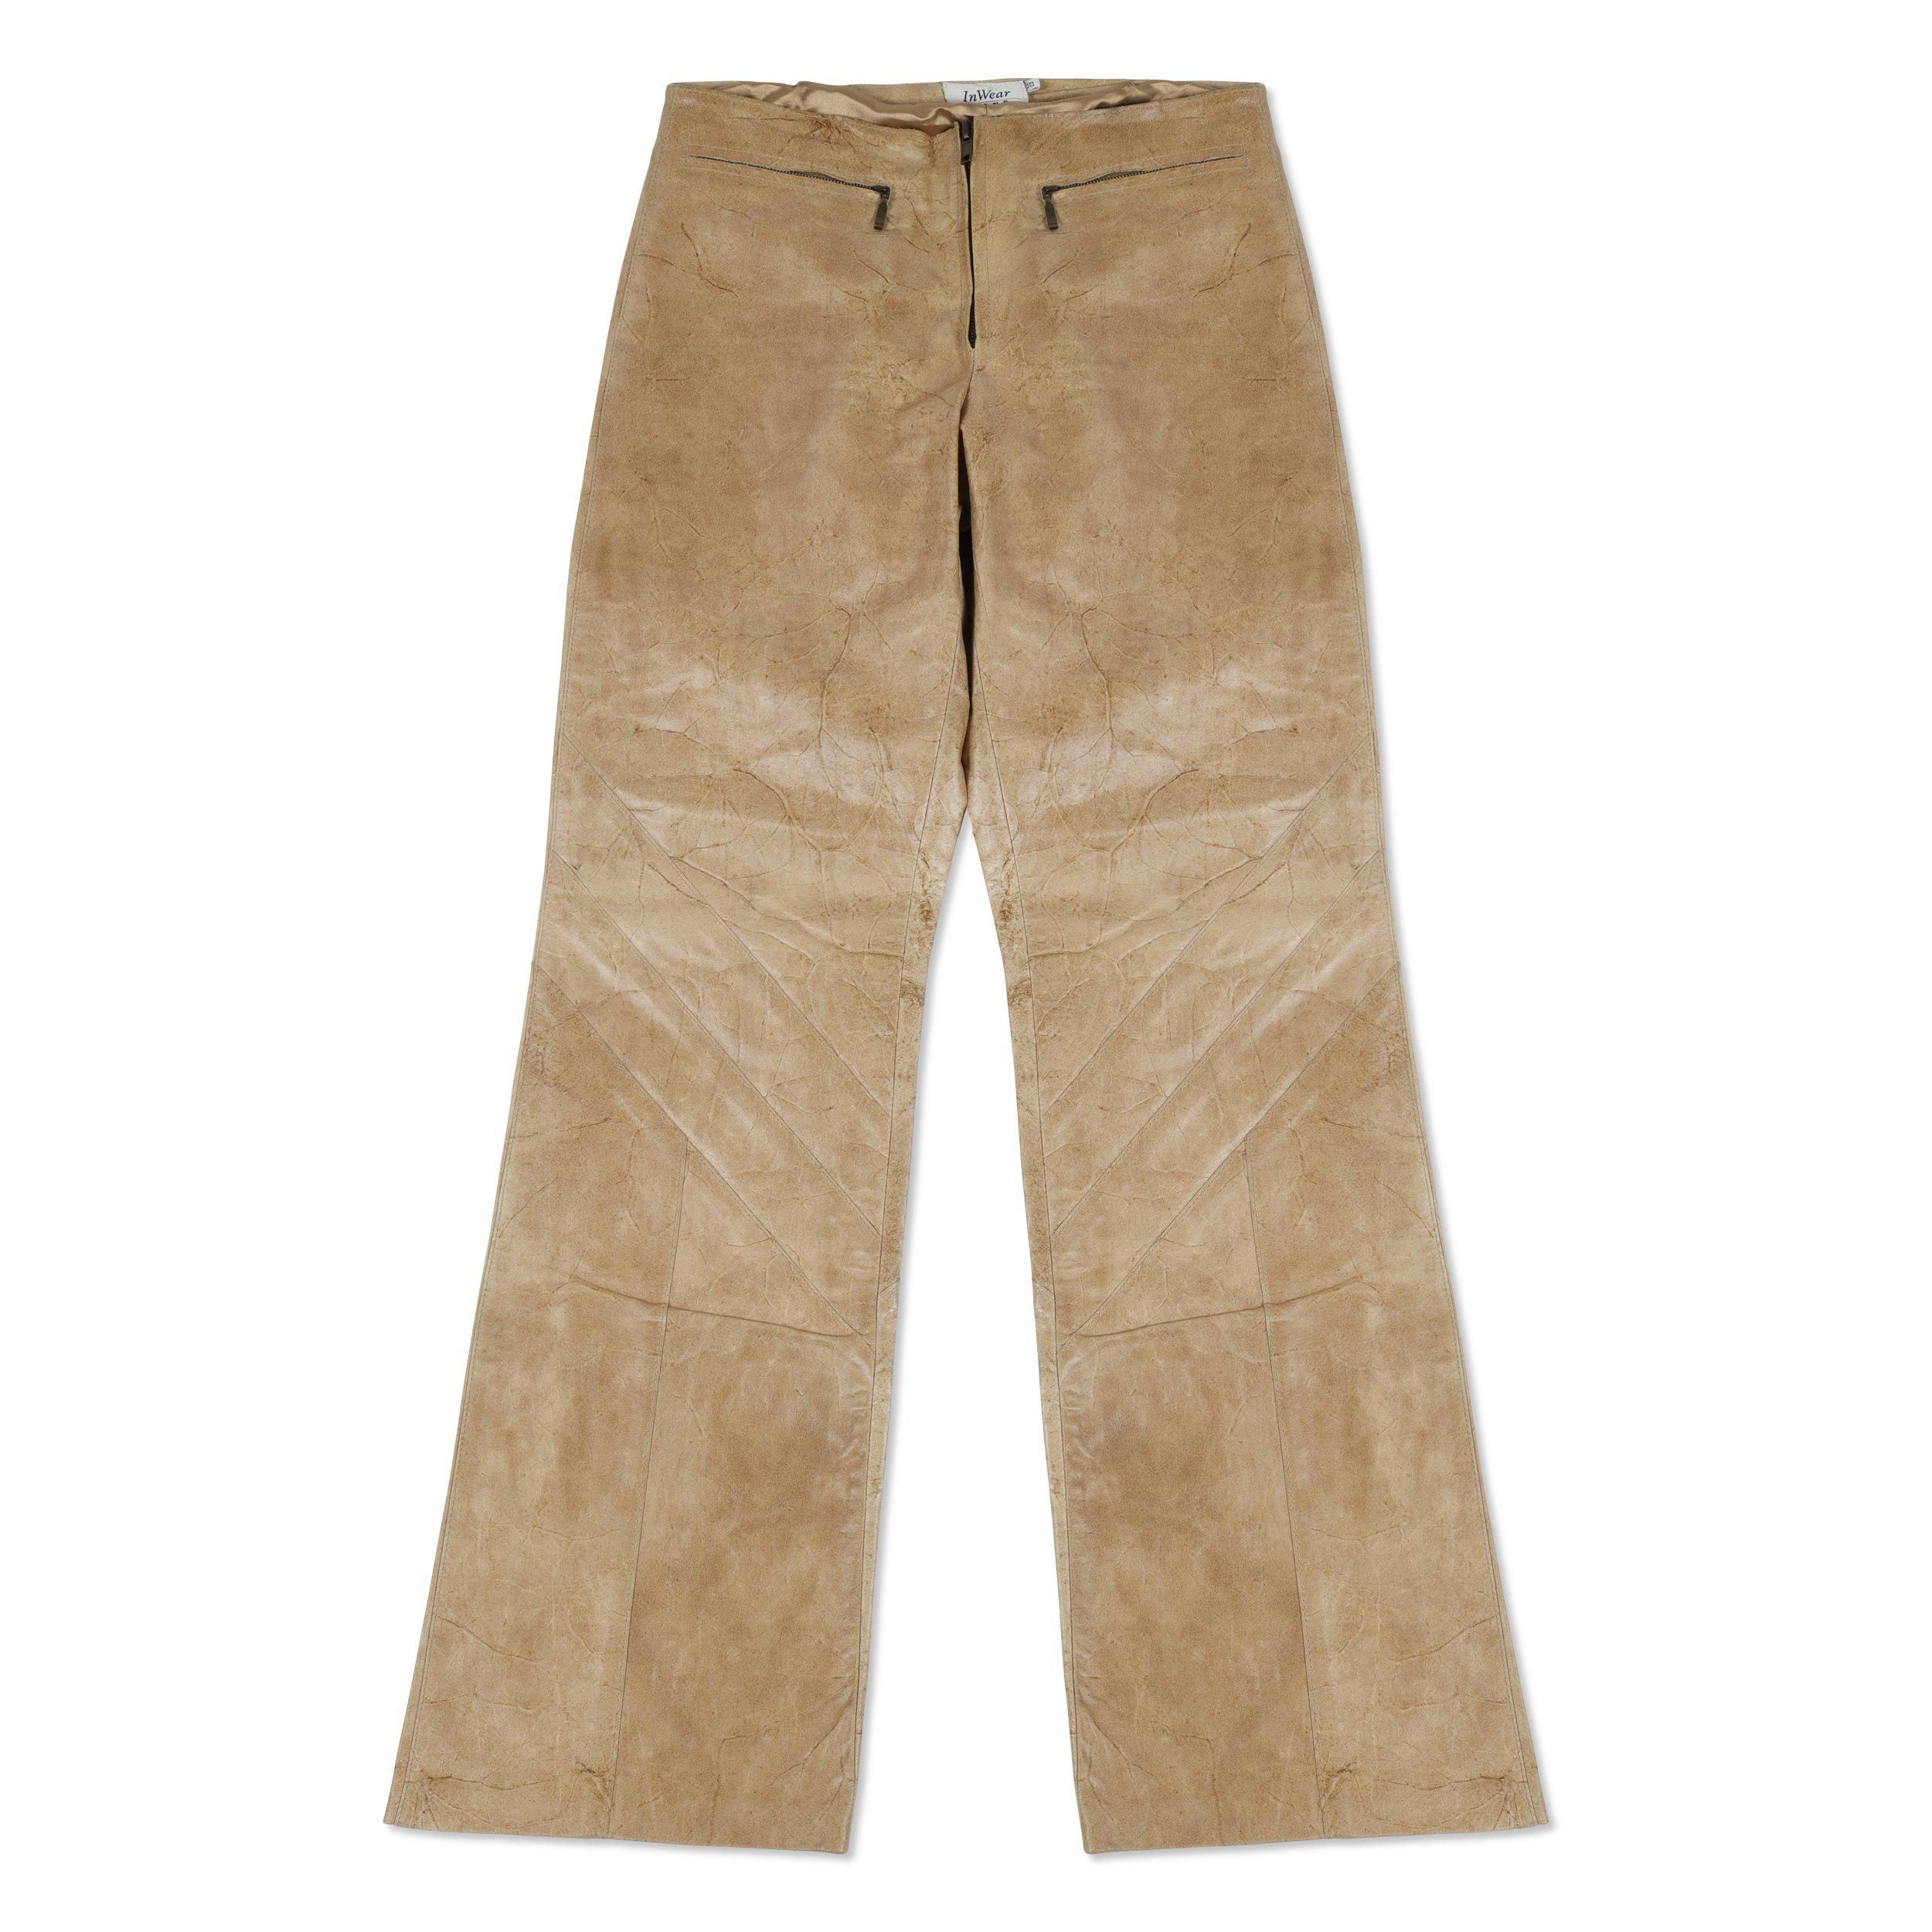 Vintage Brown Leather Pants with Zipper - Coveteur: Inside Closets ...